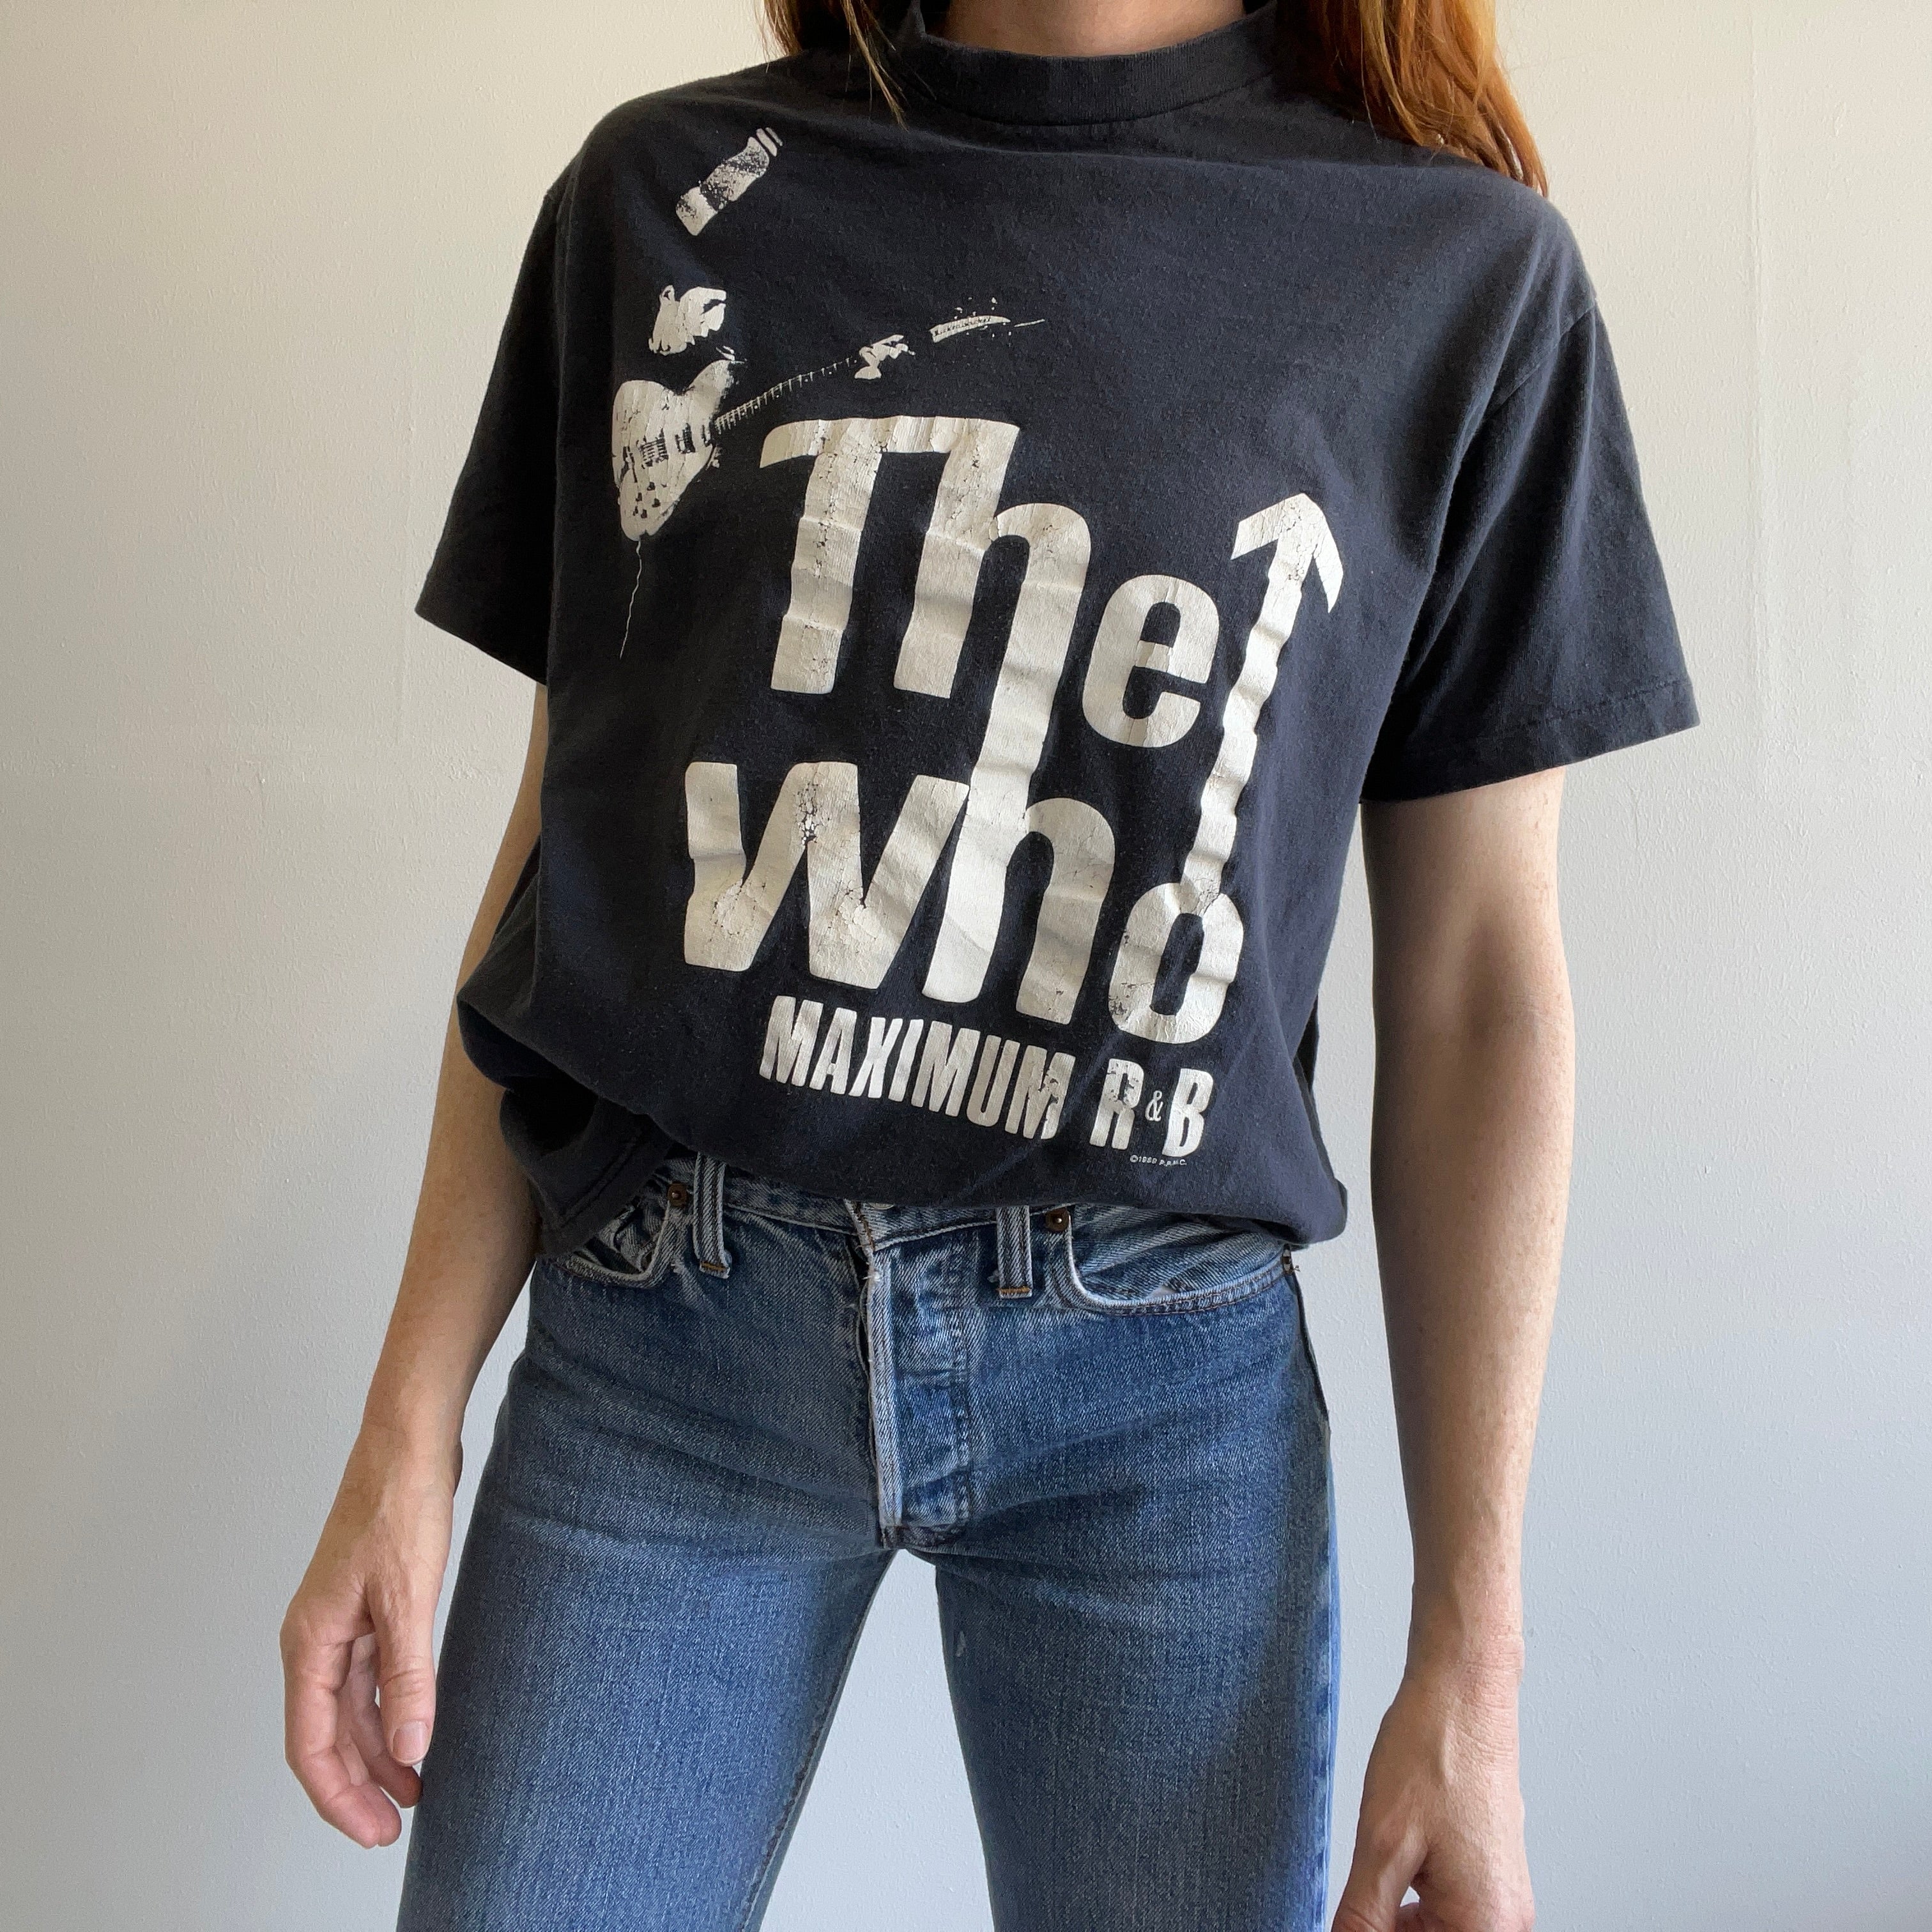 1989 The Who Maximum R&B Cotton T-Shirt- USA MADE - WOW!!!!